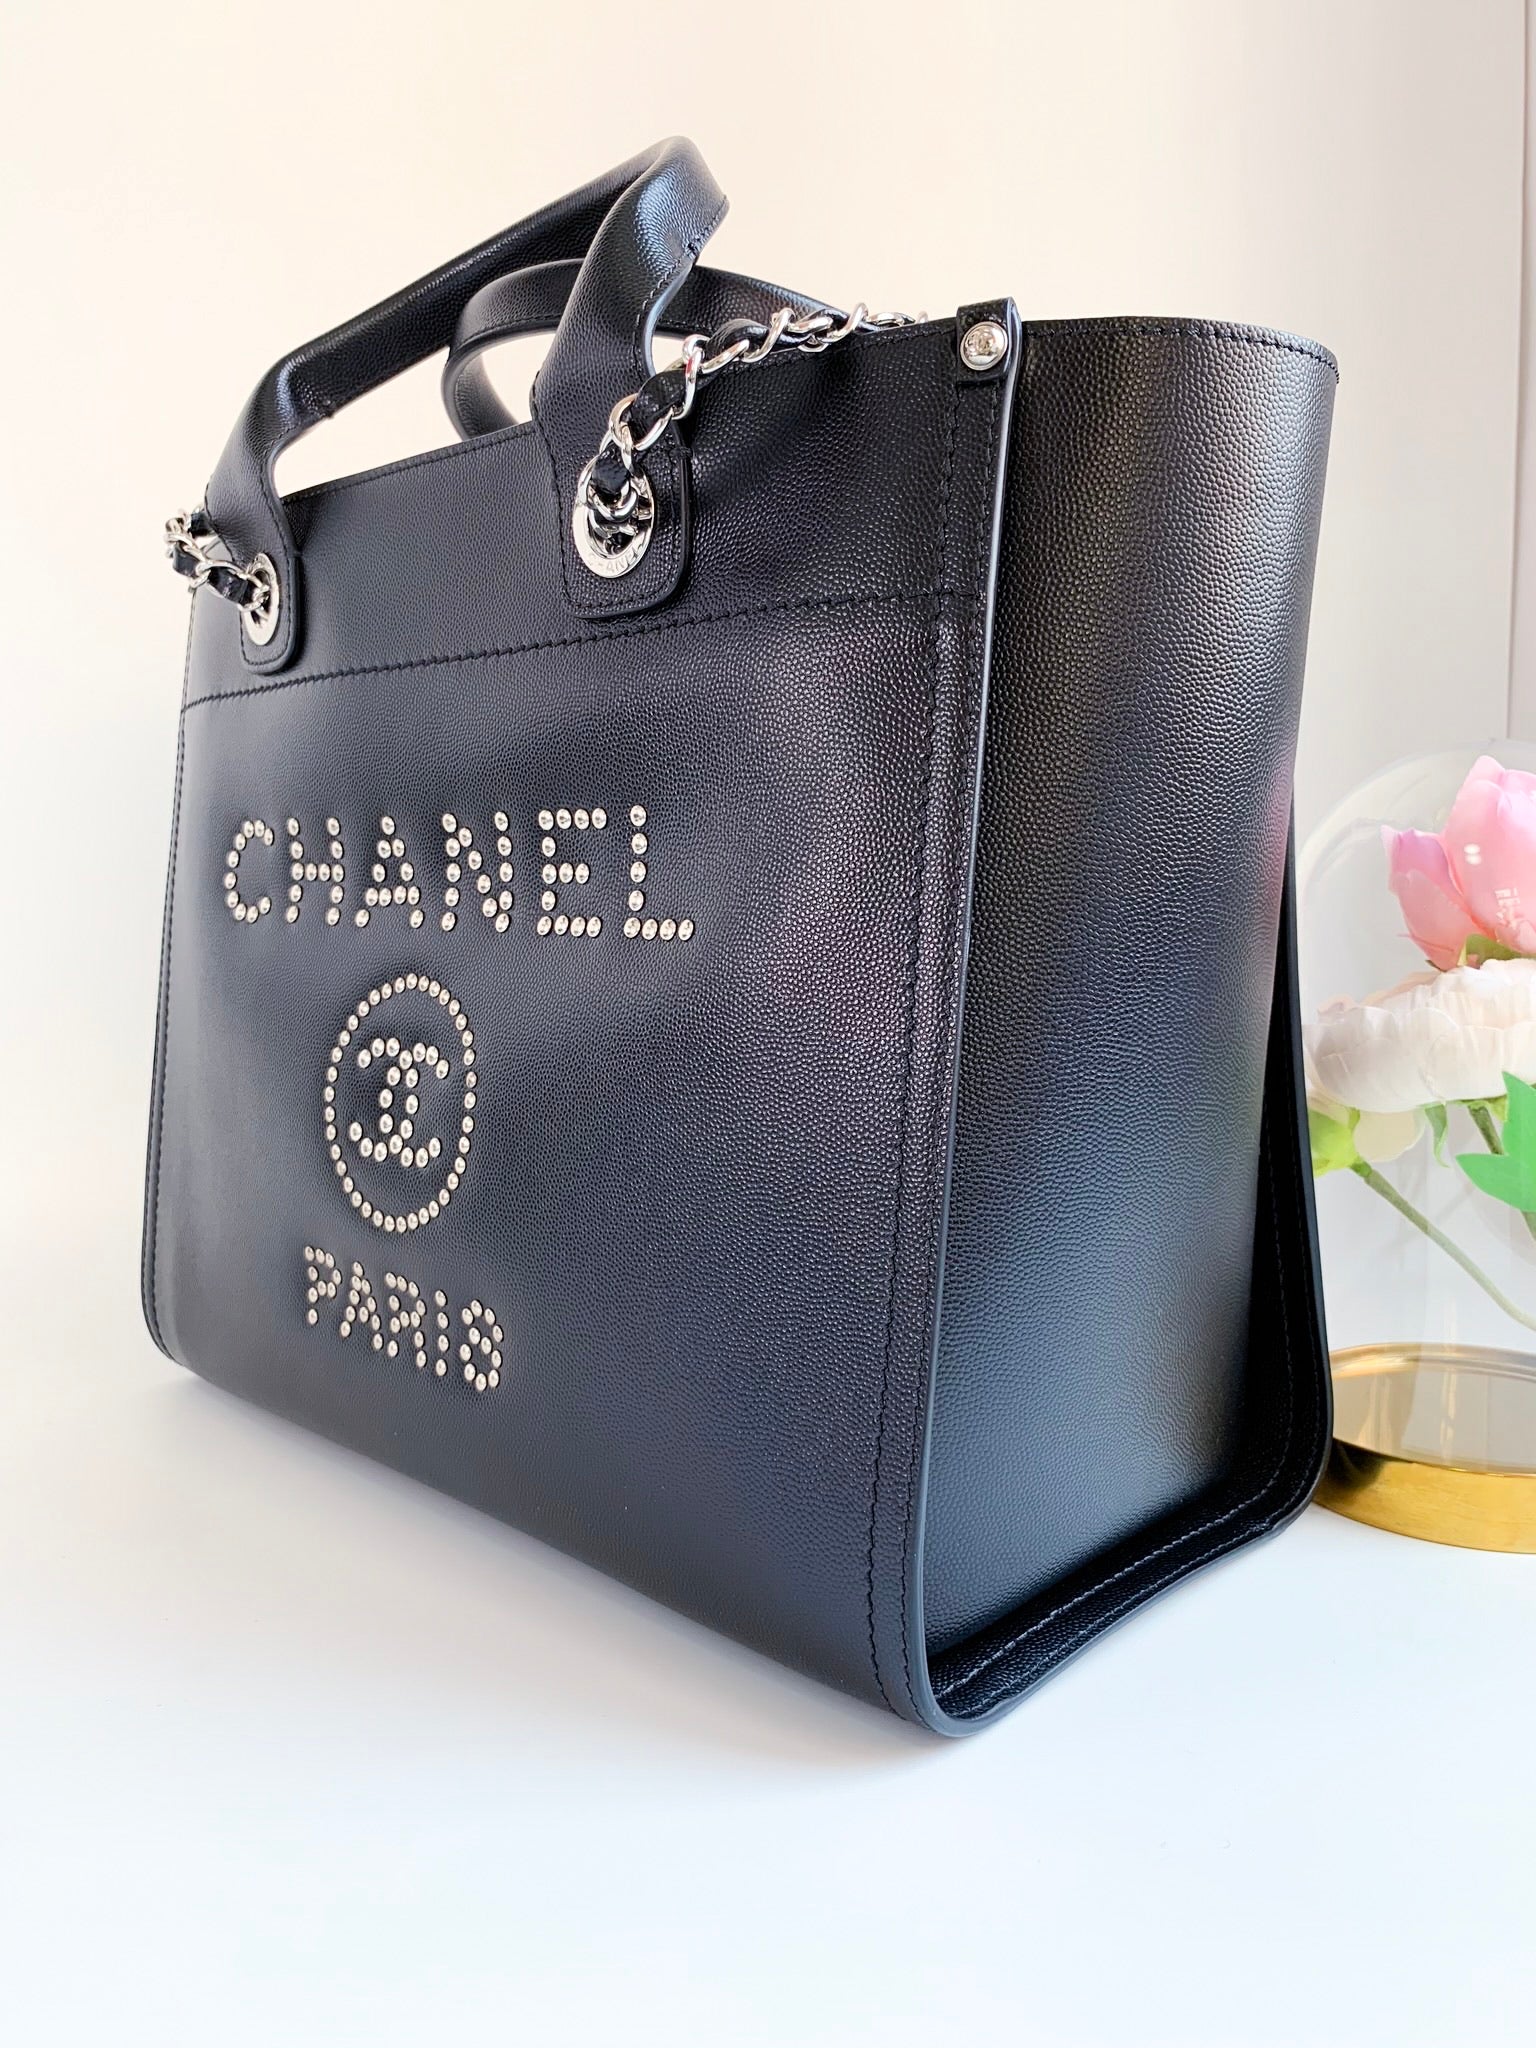 Chanel Small Studded Deauville Tote Black Caviar Silver Hardware